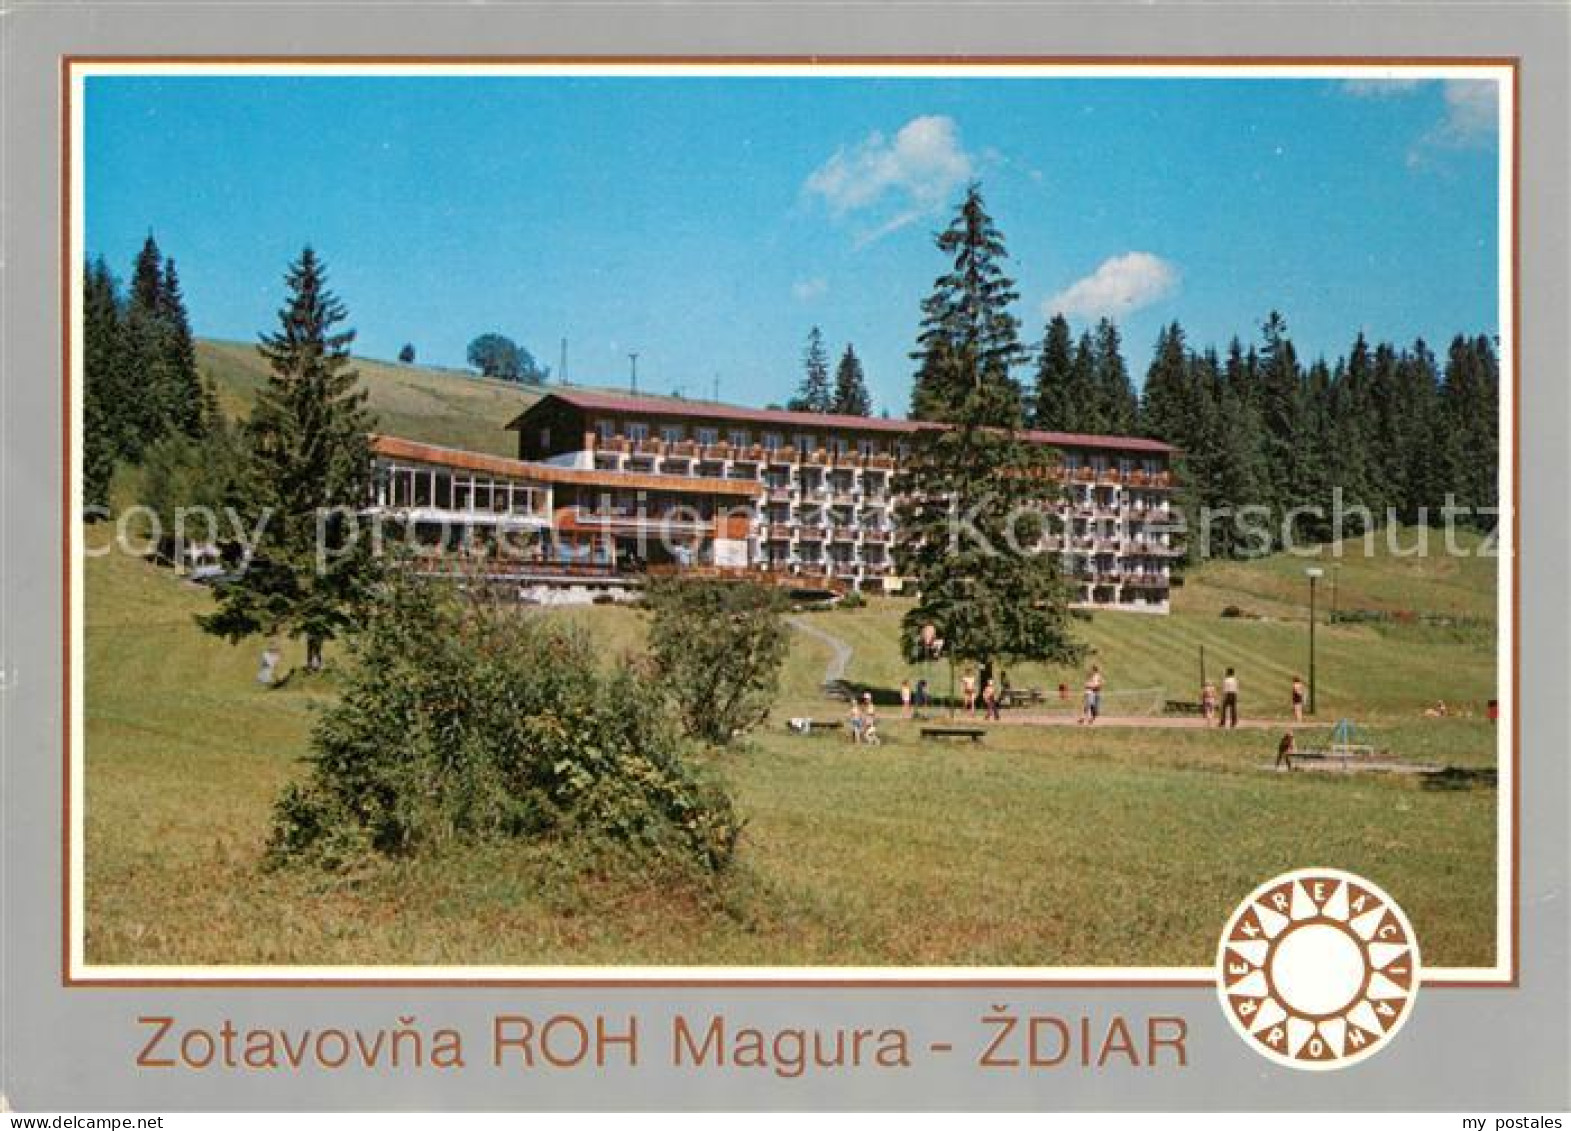 73062464 Zdiar Zotavovna ROH Magura Zdiar - Slovakia